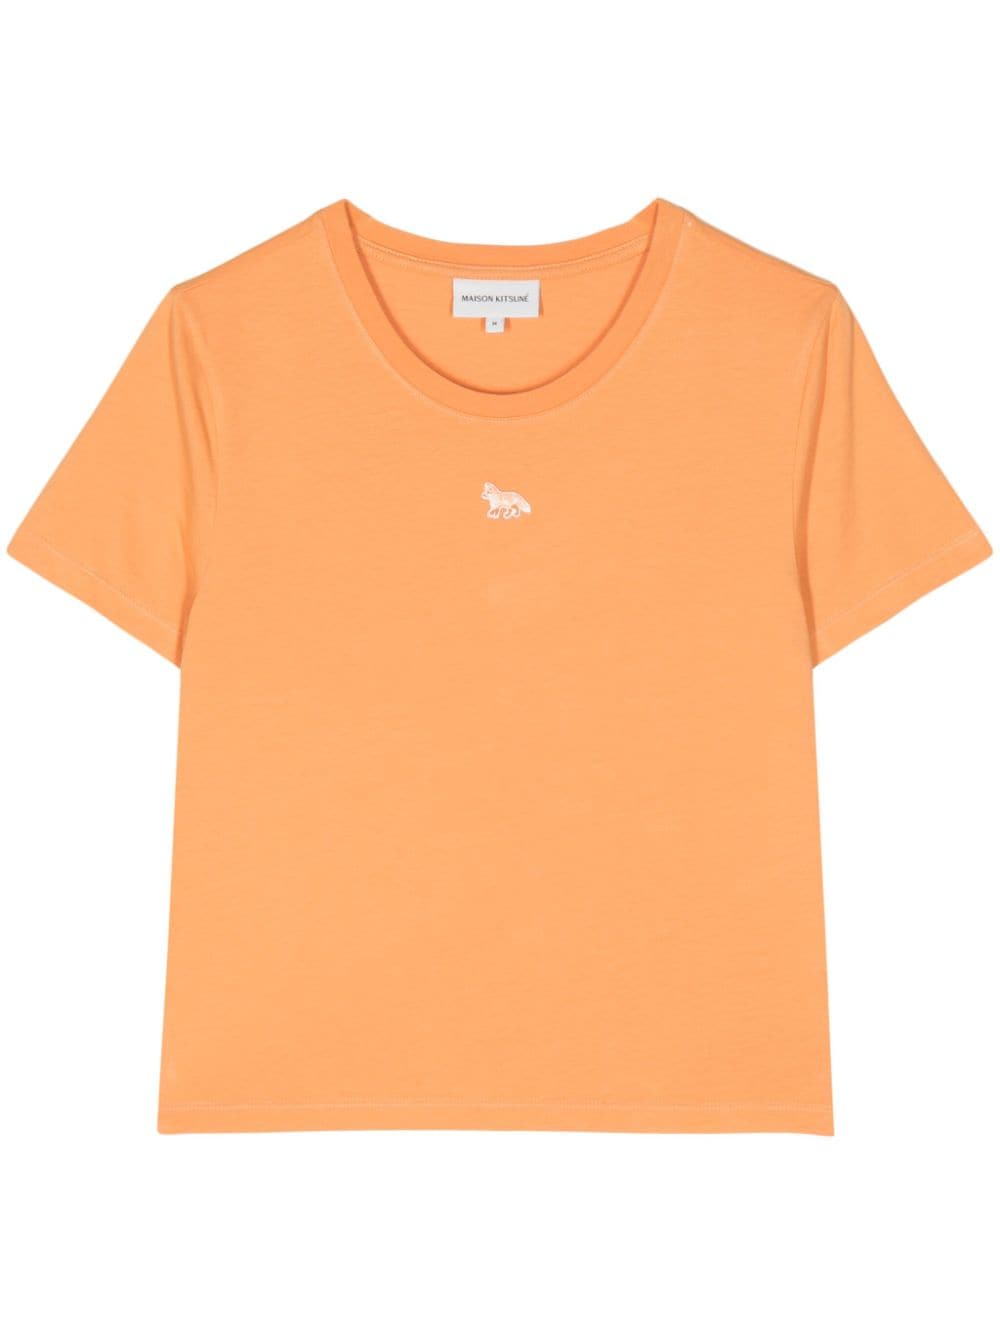 maison kitsuné chemise baby fox - orange